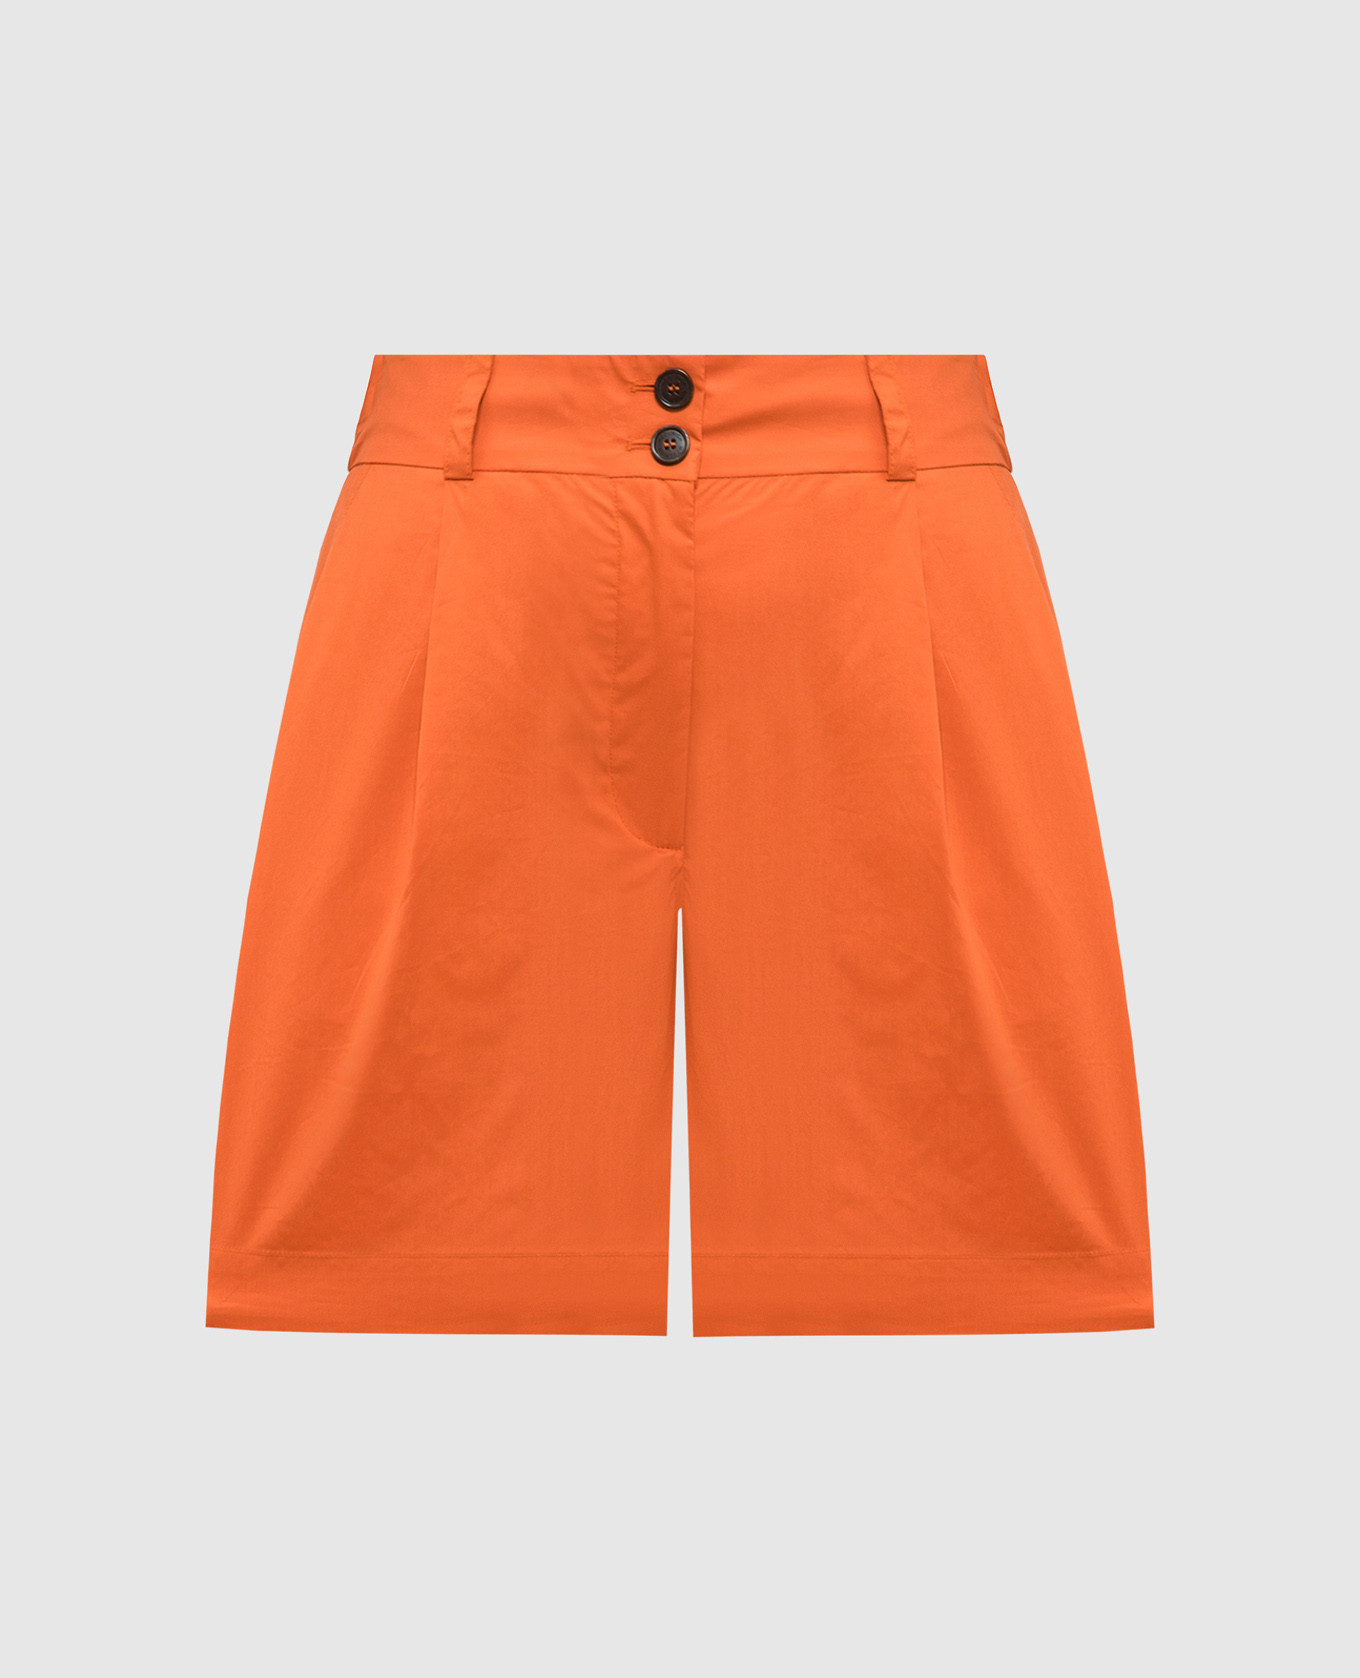 Оранжевые шорты